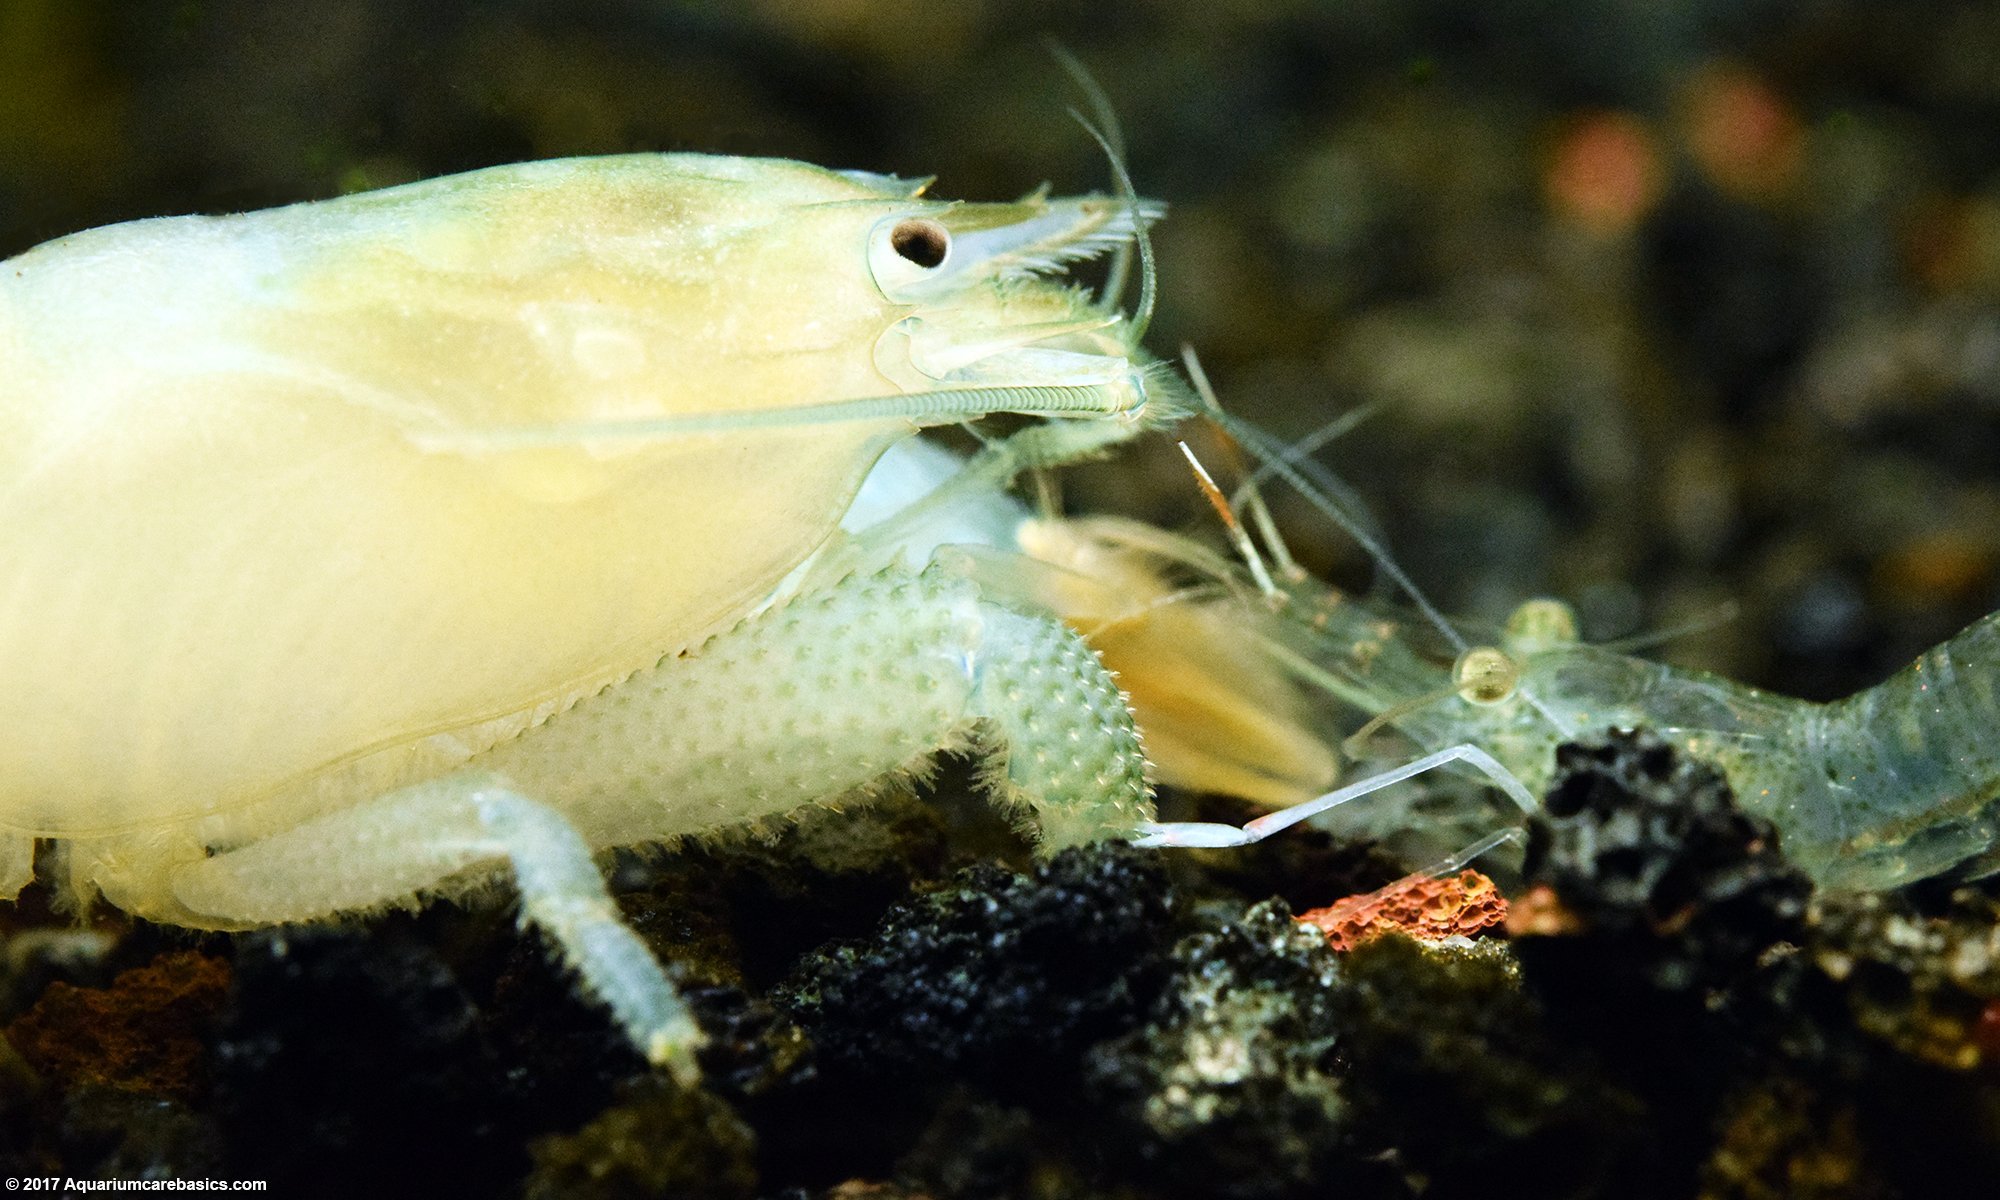 https://www.aquariumcarebasics.com/images/vampire-shrimp-ghost-shrimp.jpg